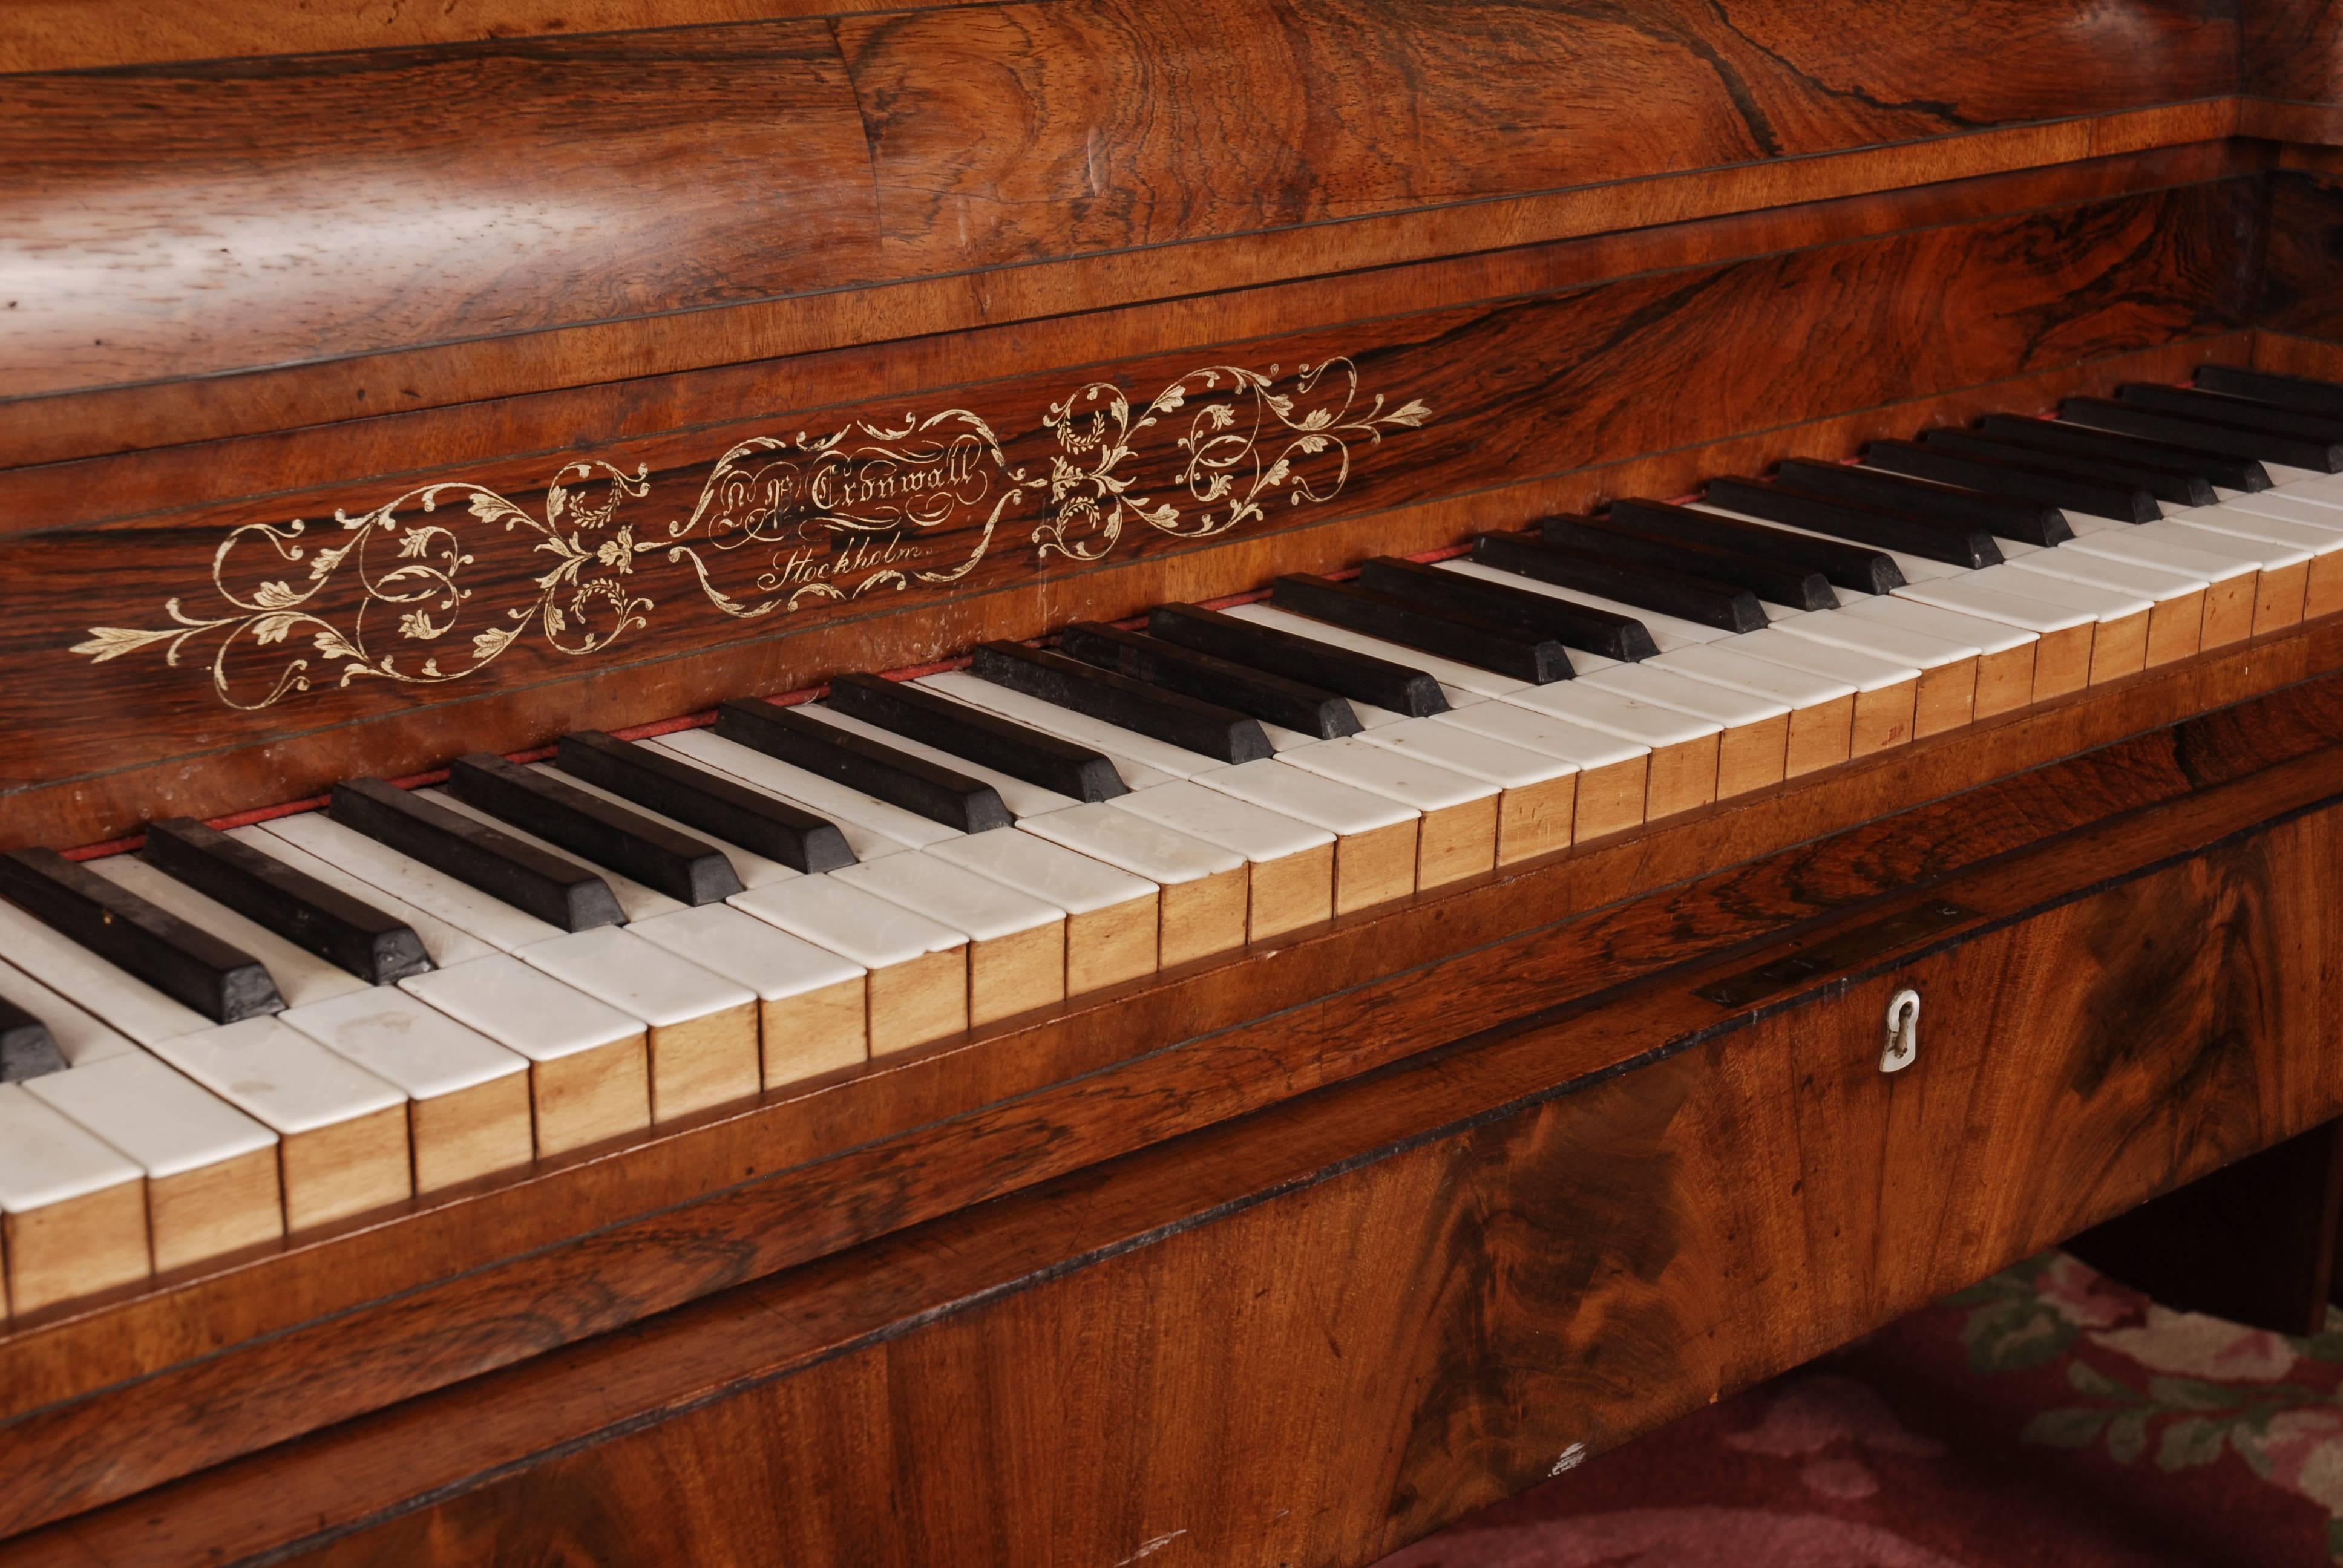 19th century piano